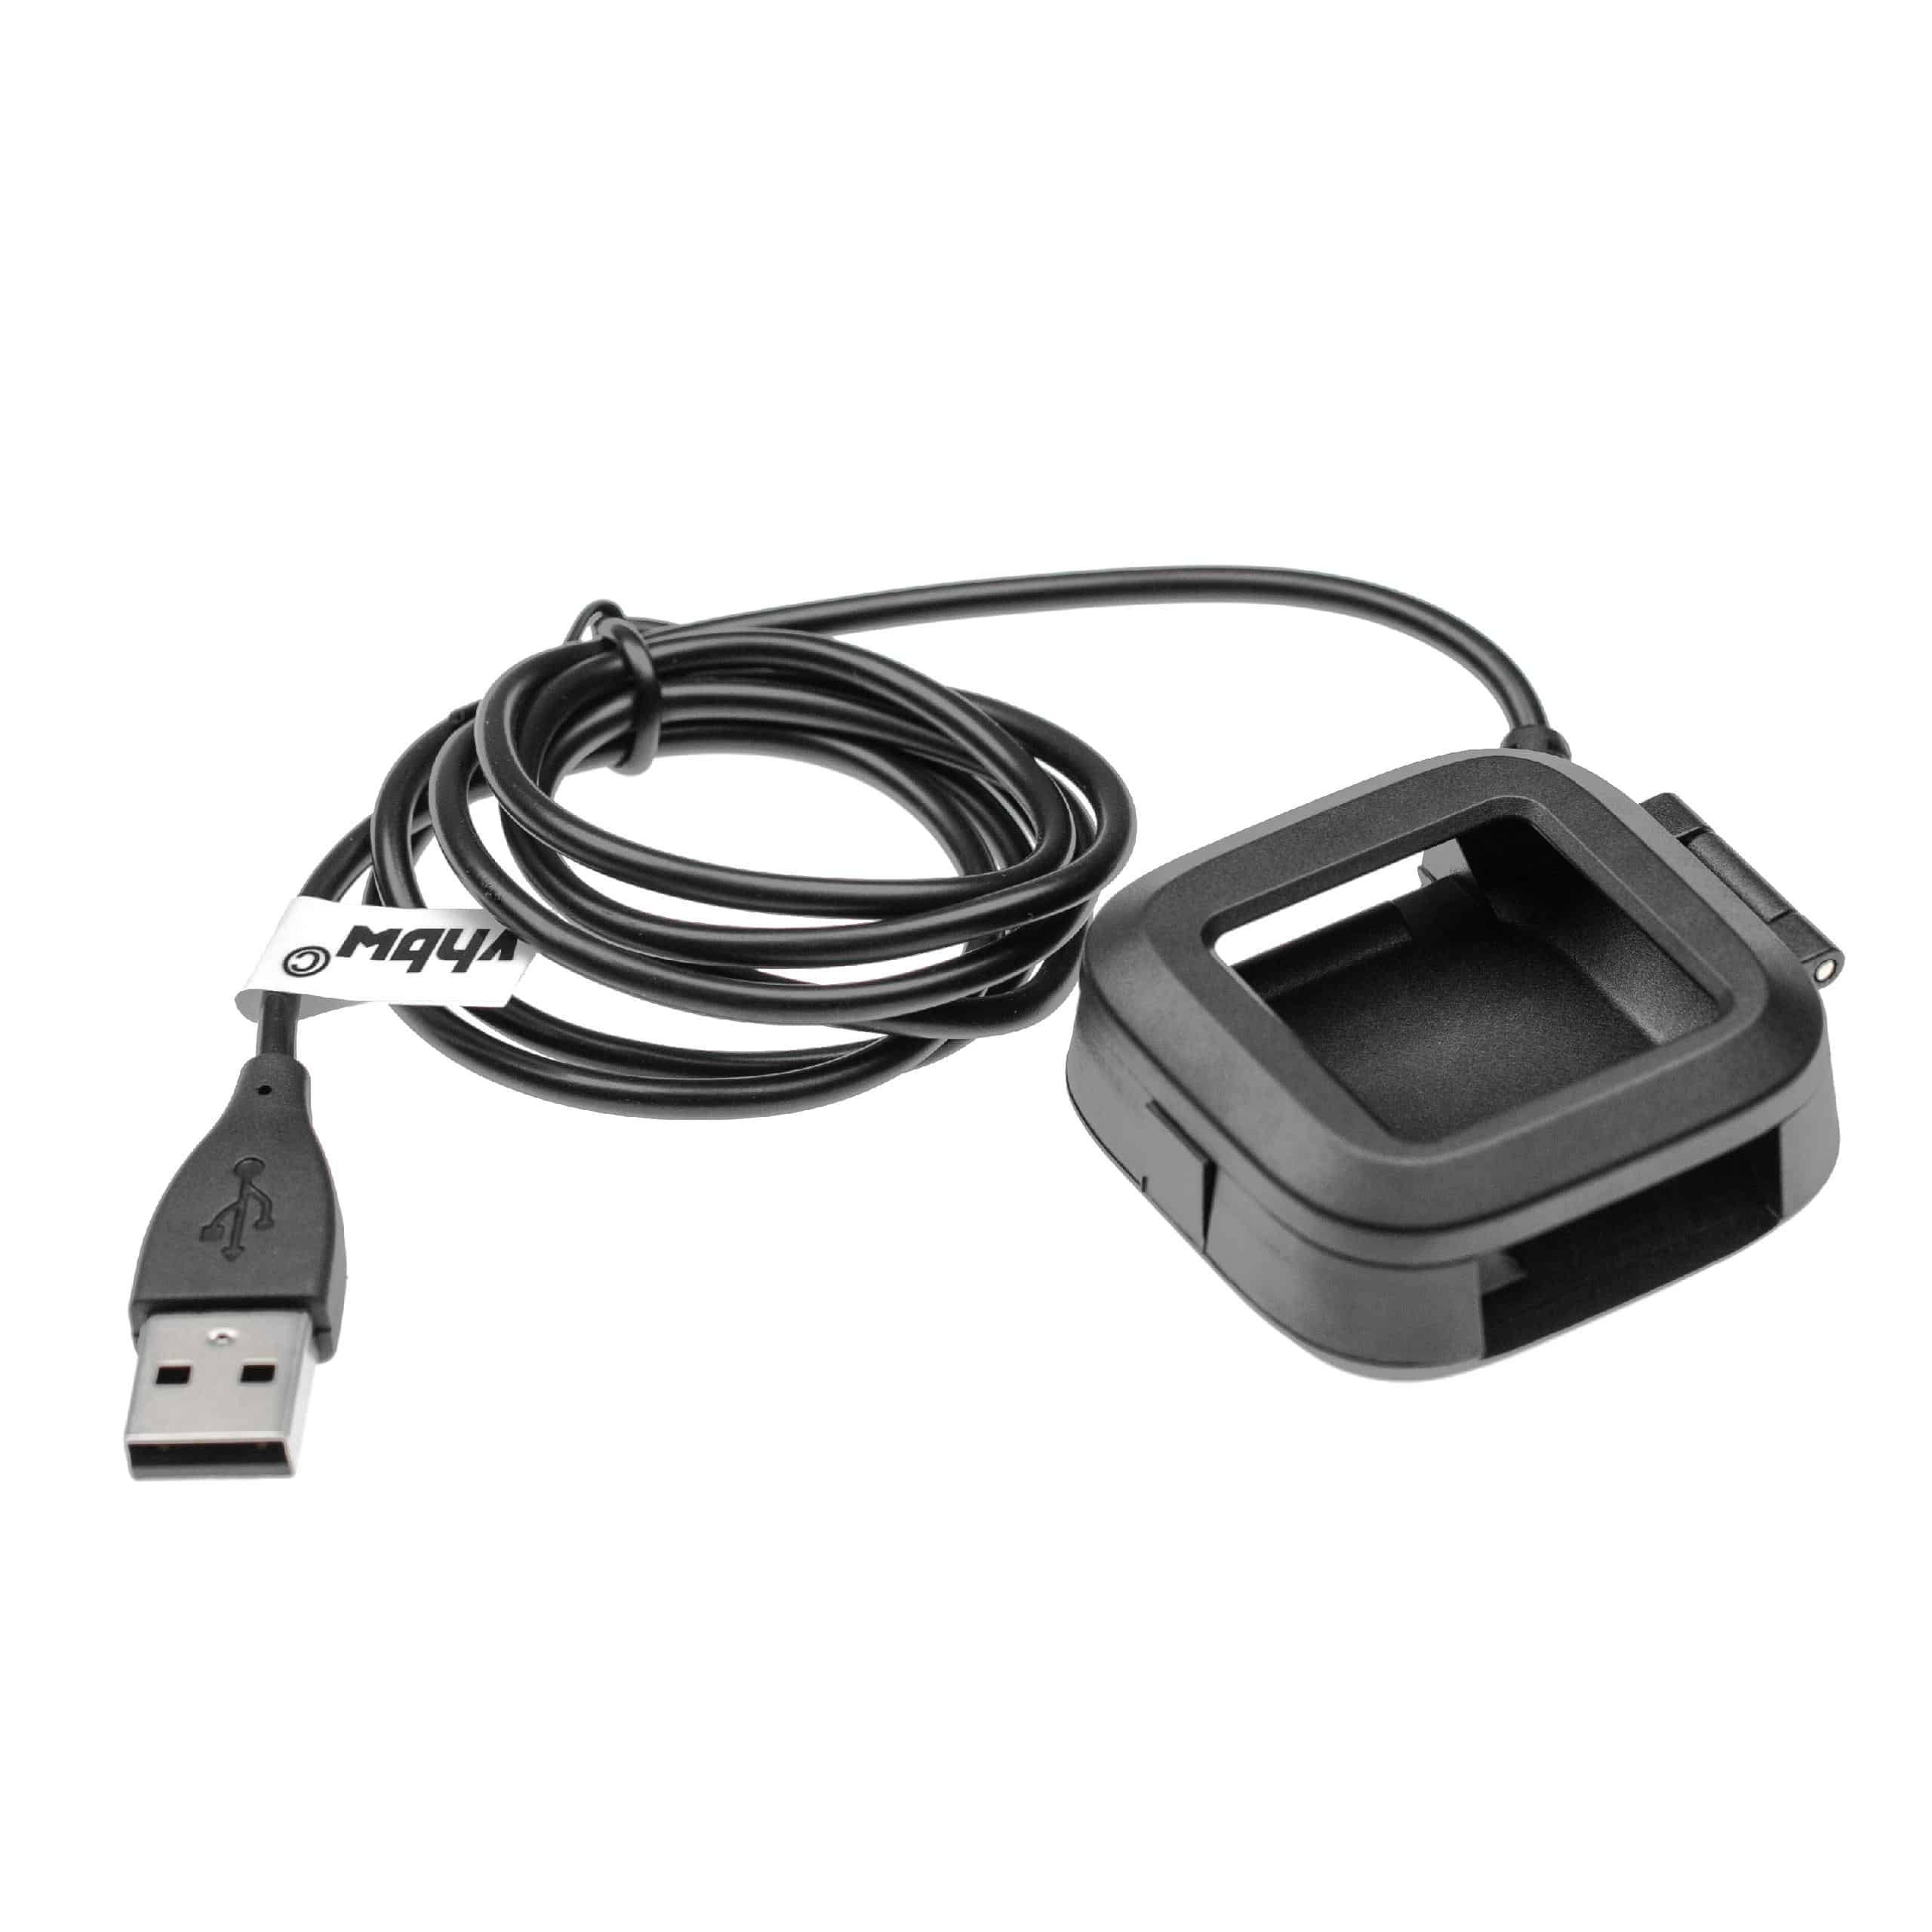 Cable de carga USB para smartwatch Fitbit Versa 2 - negro 100 cm